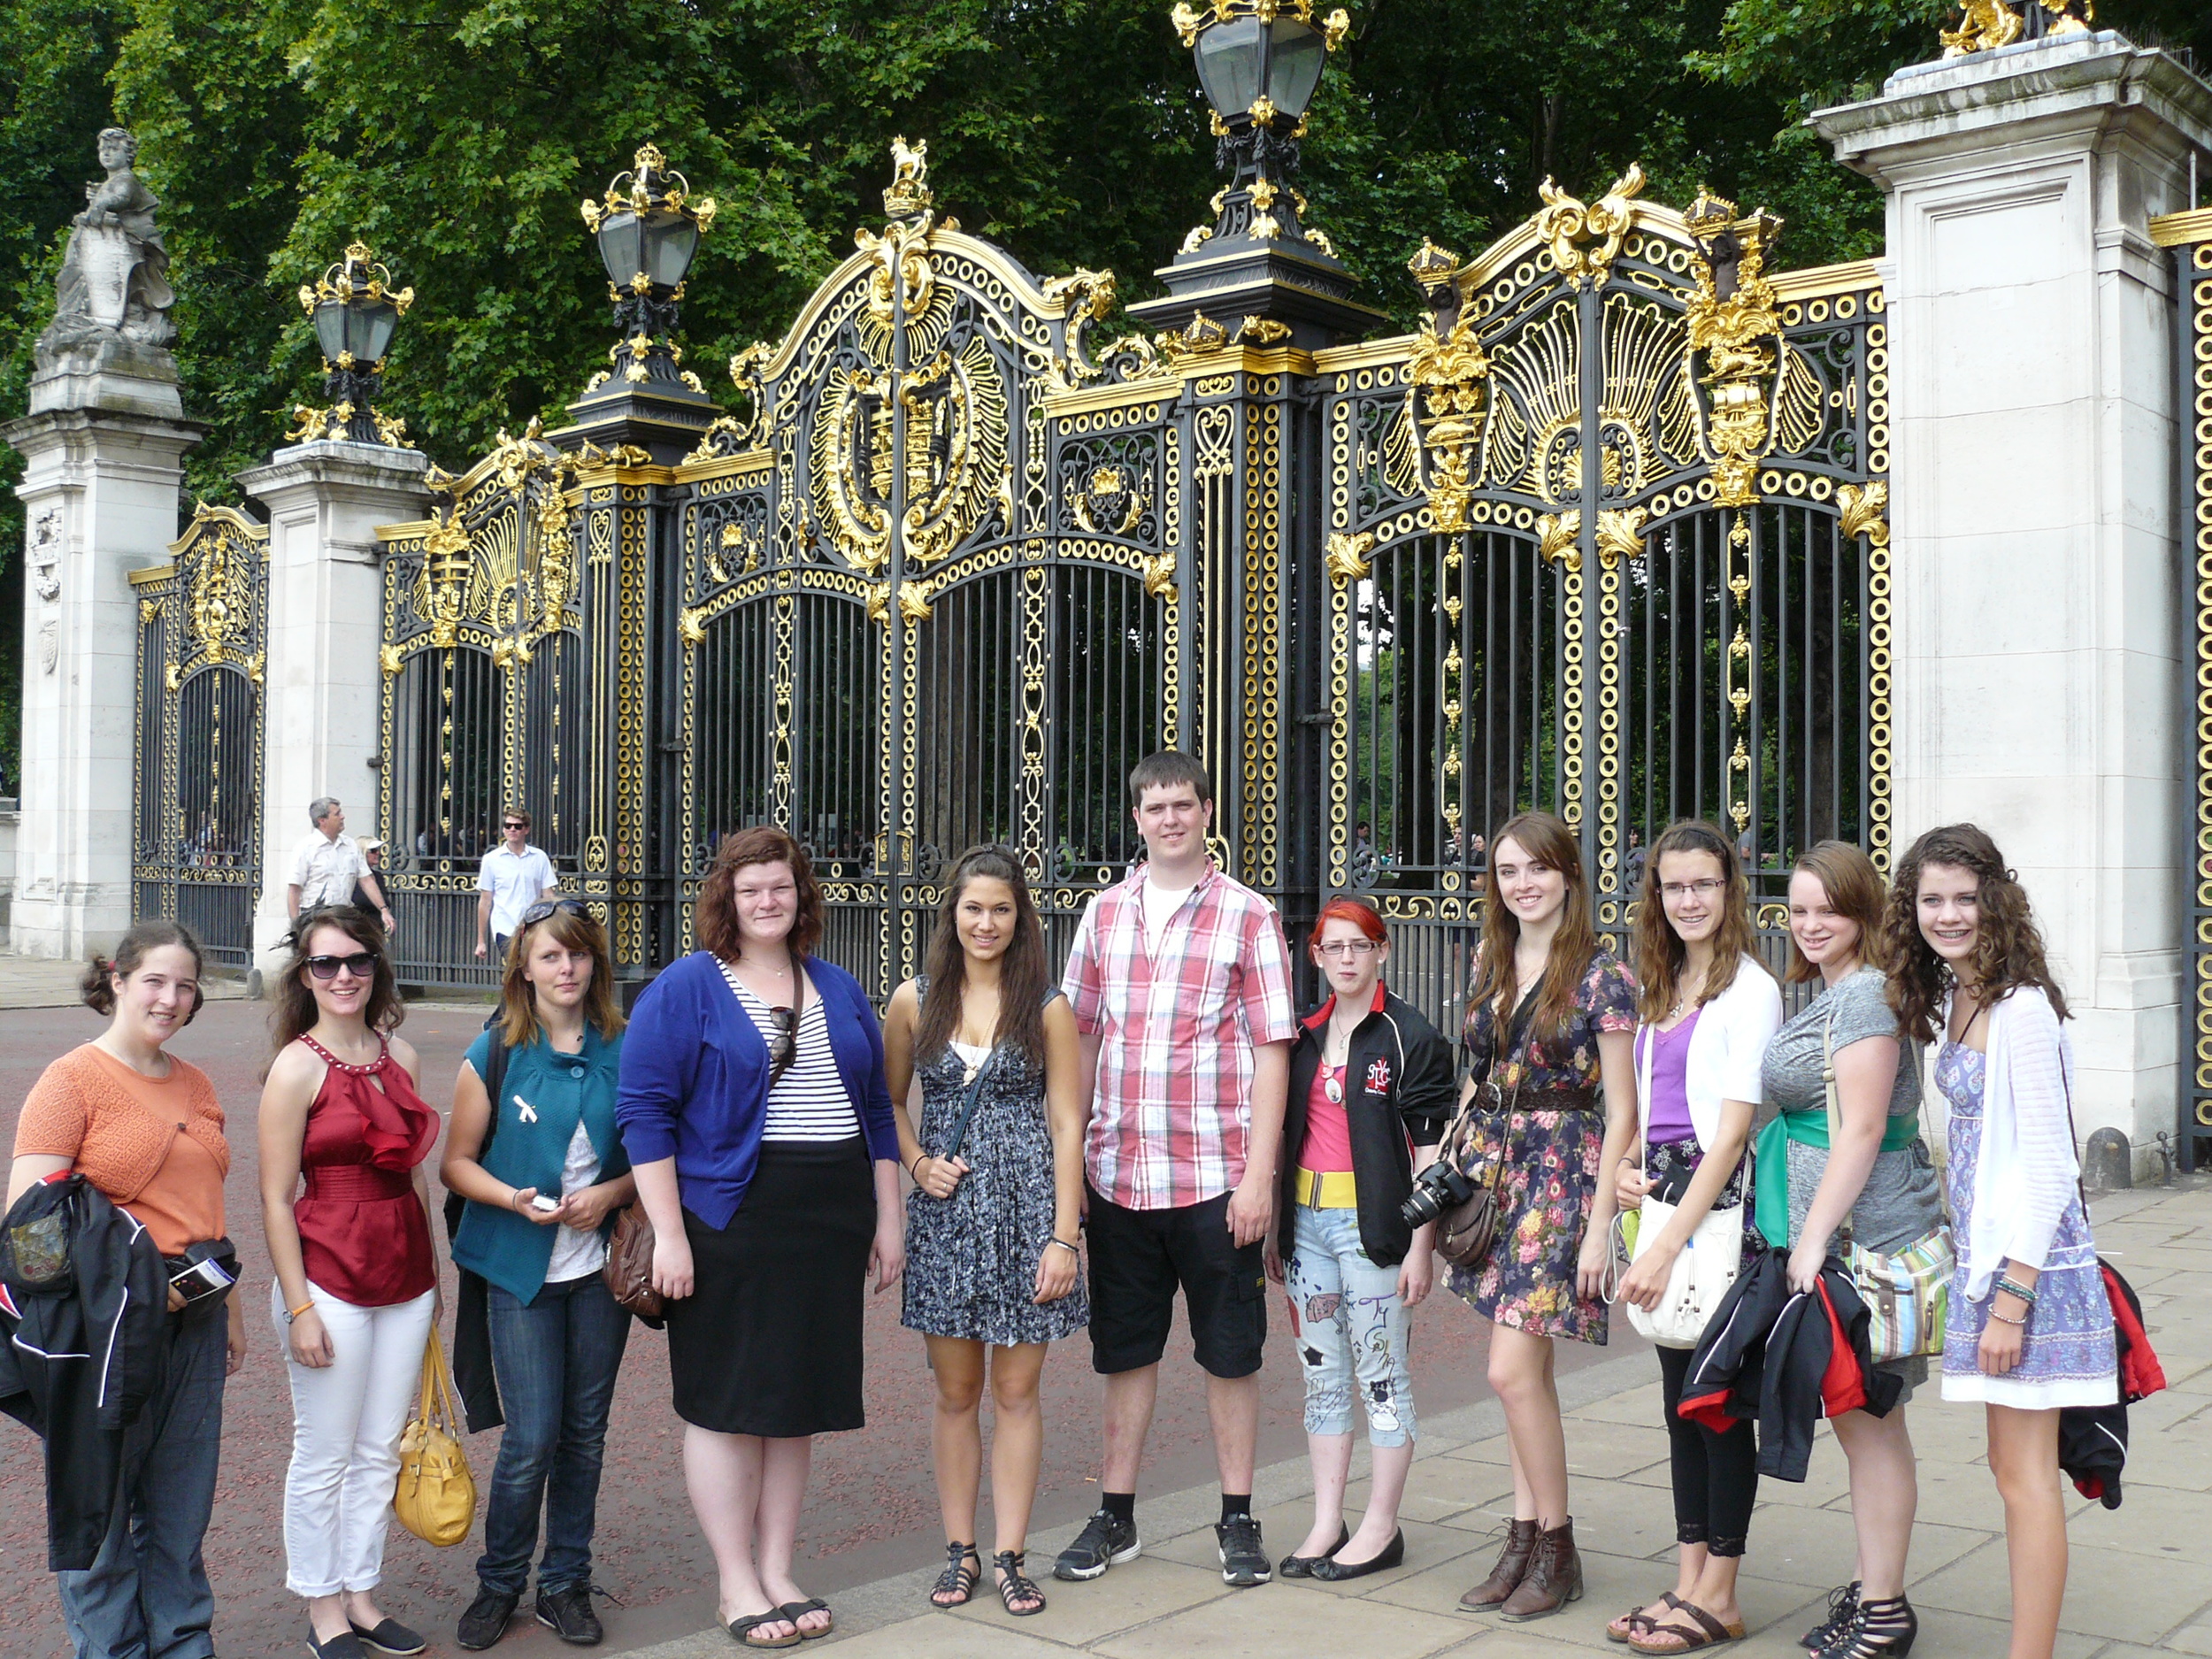  Outside the "Canada" gates beside Buckingham Palace, London 